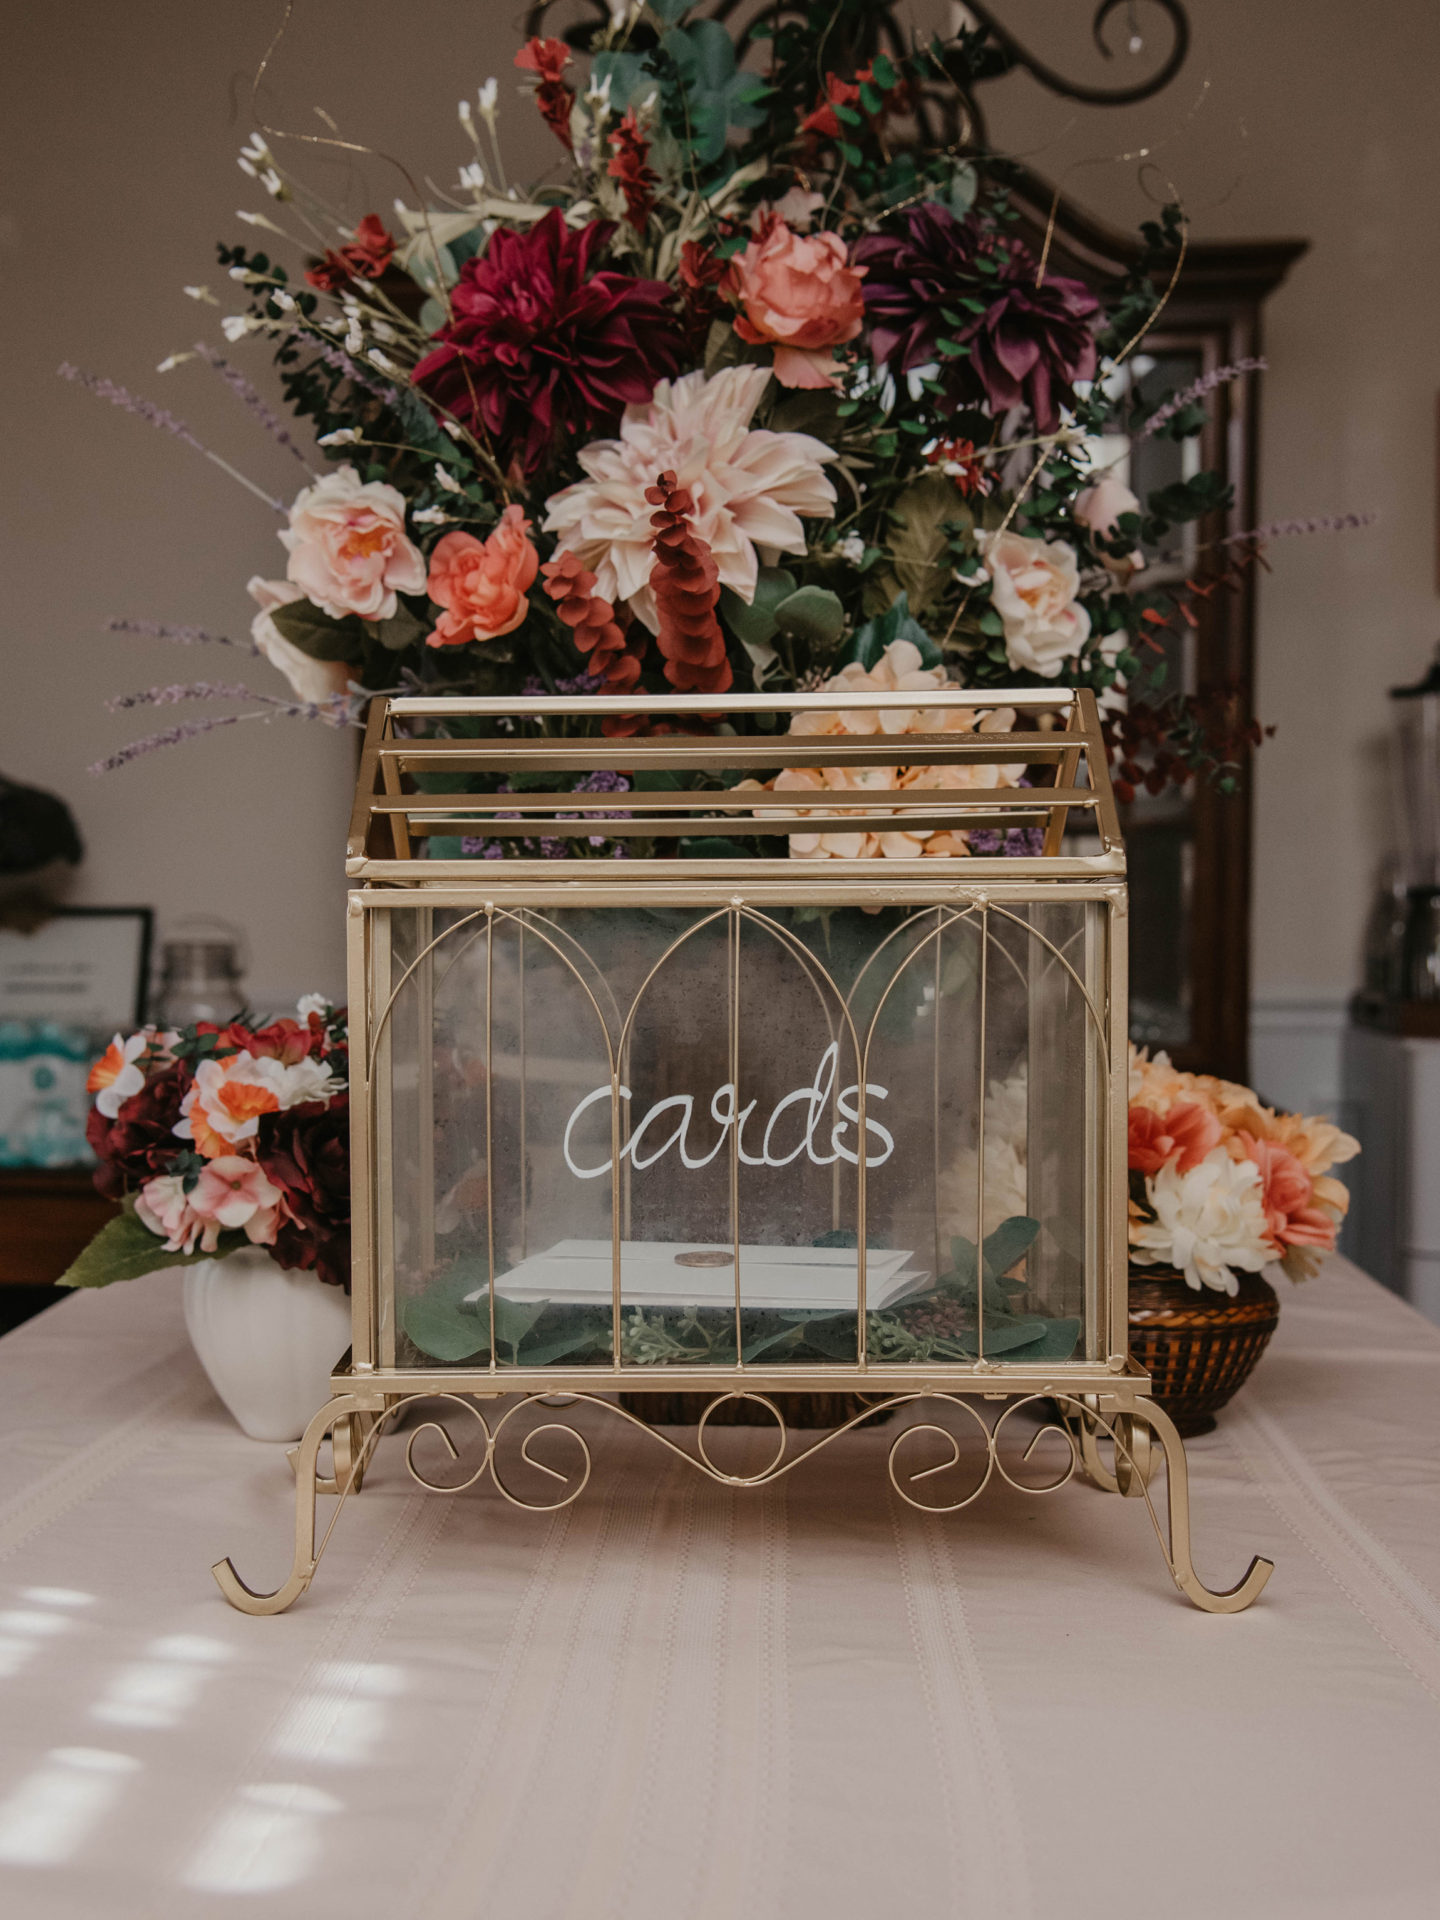 Upcycled Wedding Card Box For A Beach Wedding - Interior Frugalista